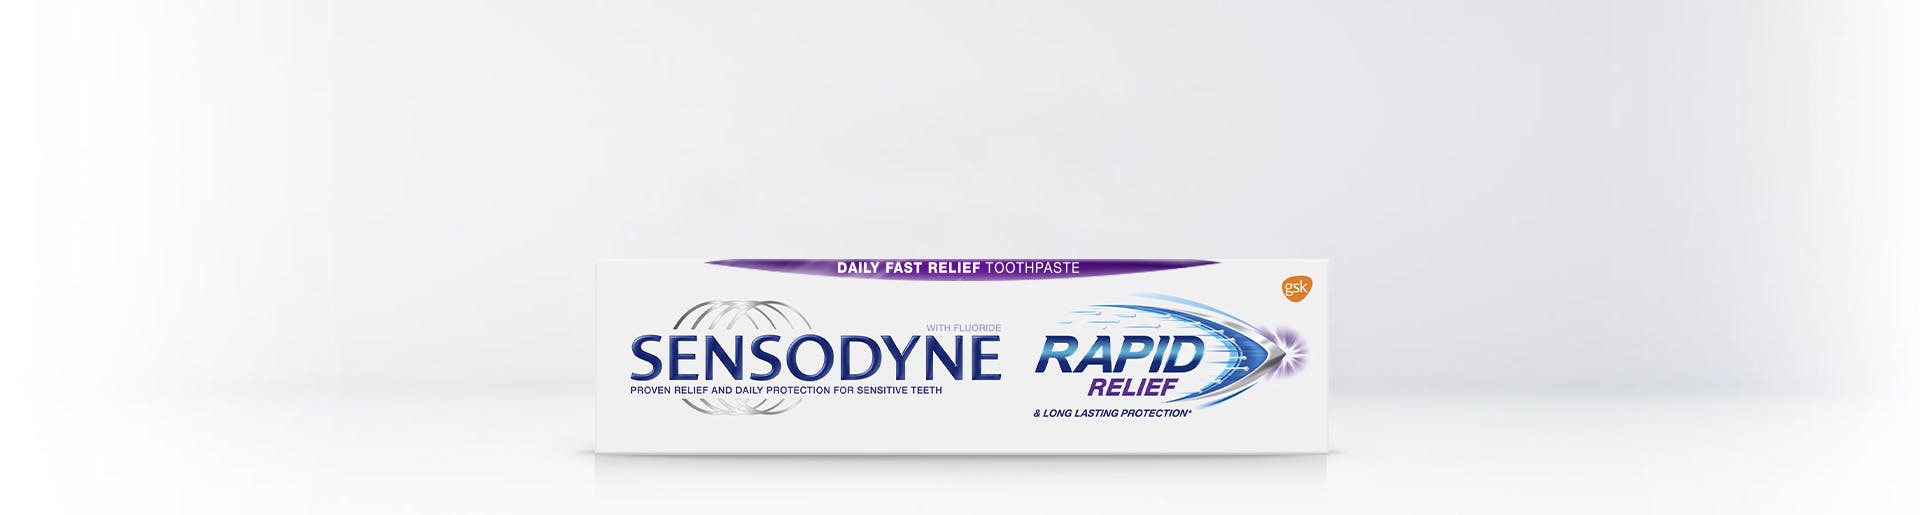 Sensodyne Rapid Relief campaign banner